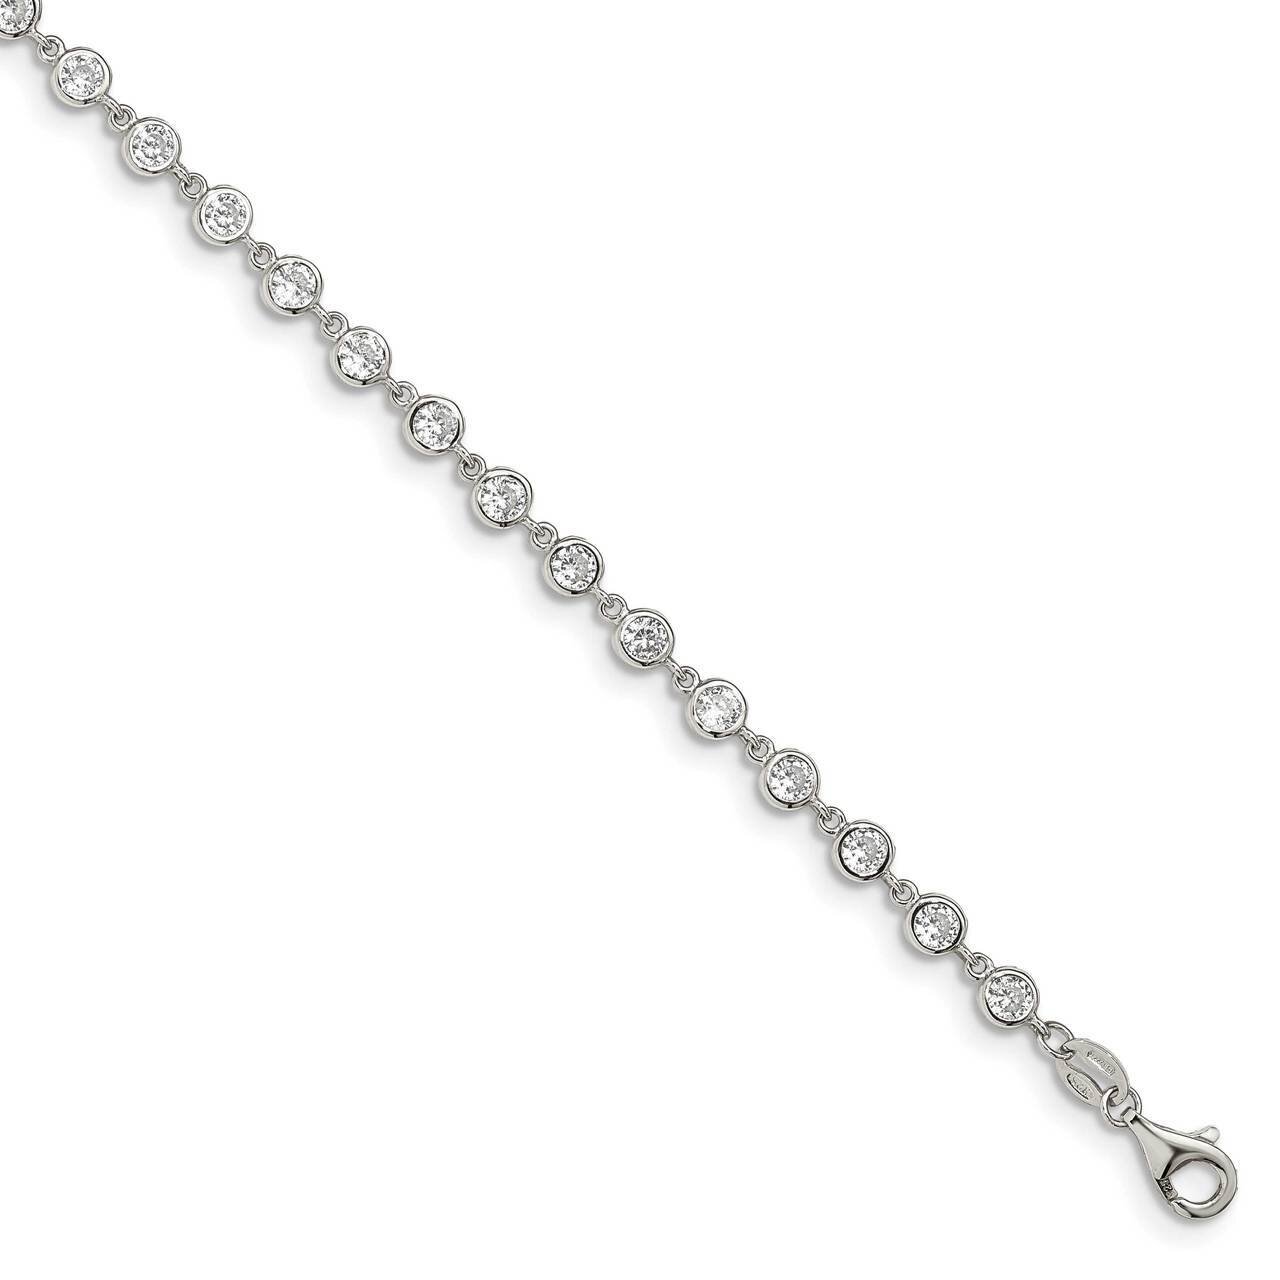 Bracelet with 1 inch extender. Sterling Silver CZ Diamond QG4885-7